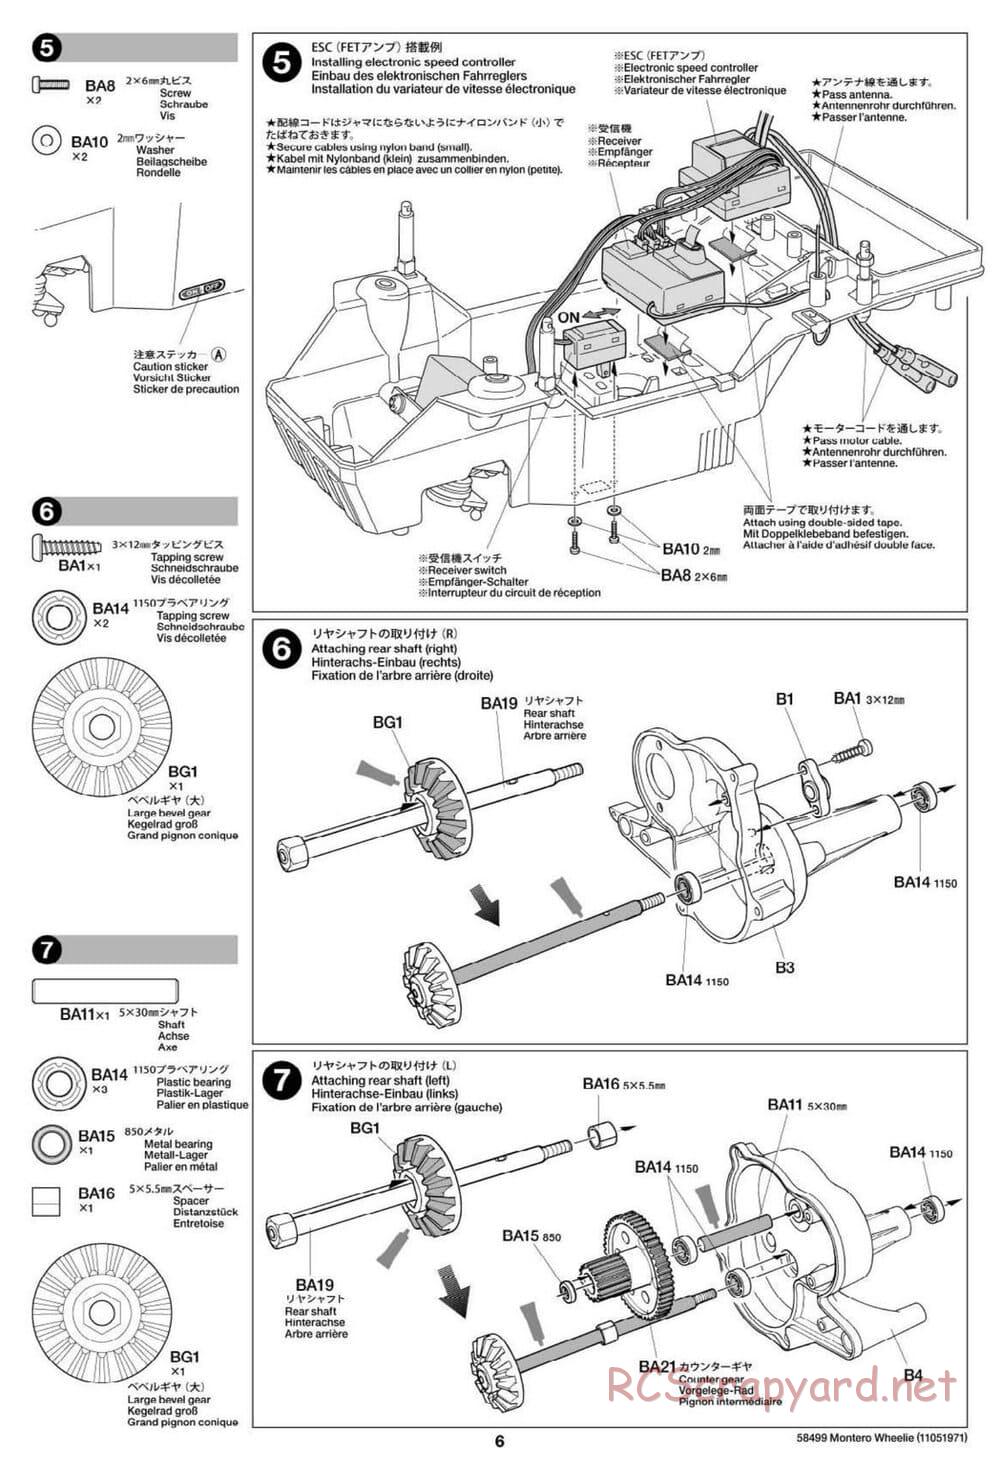 Tamiya - Mitsubishi Montero Wheelie - CW-01 Chassis - Manual - Page 6